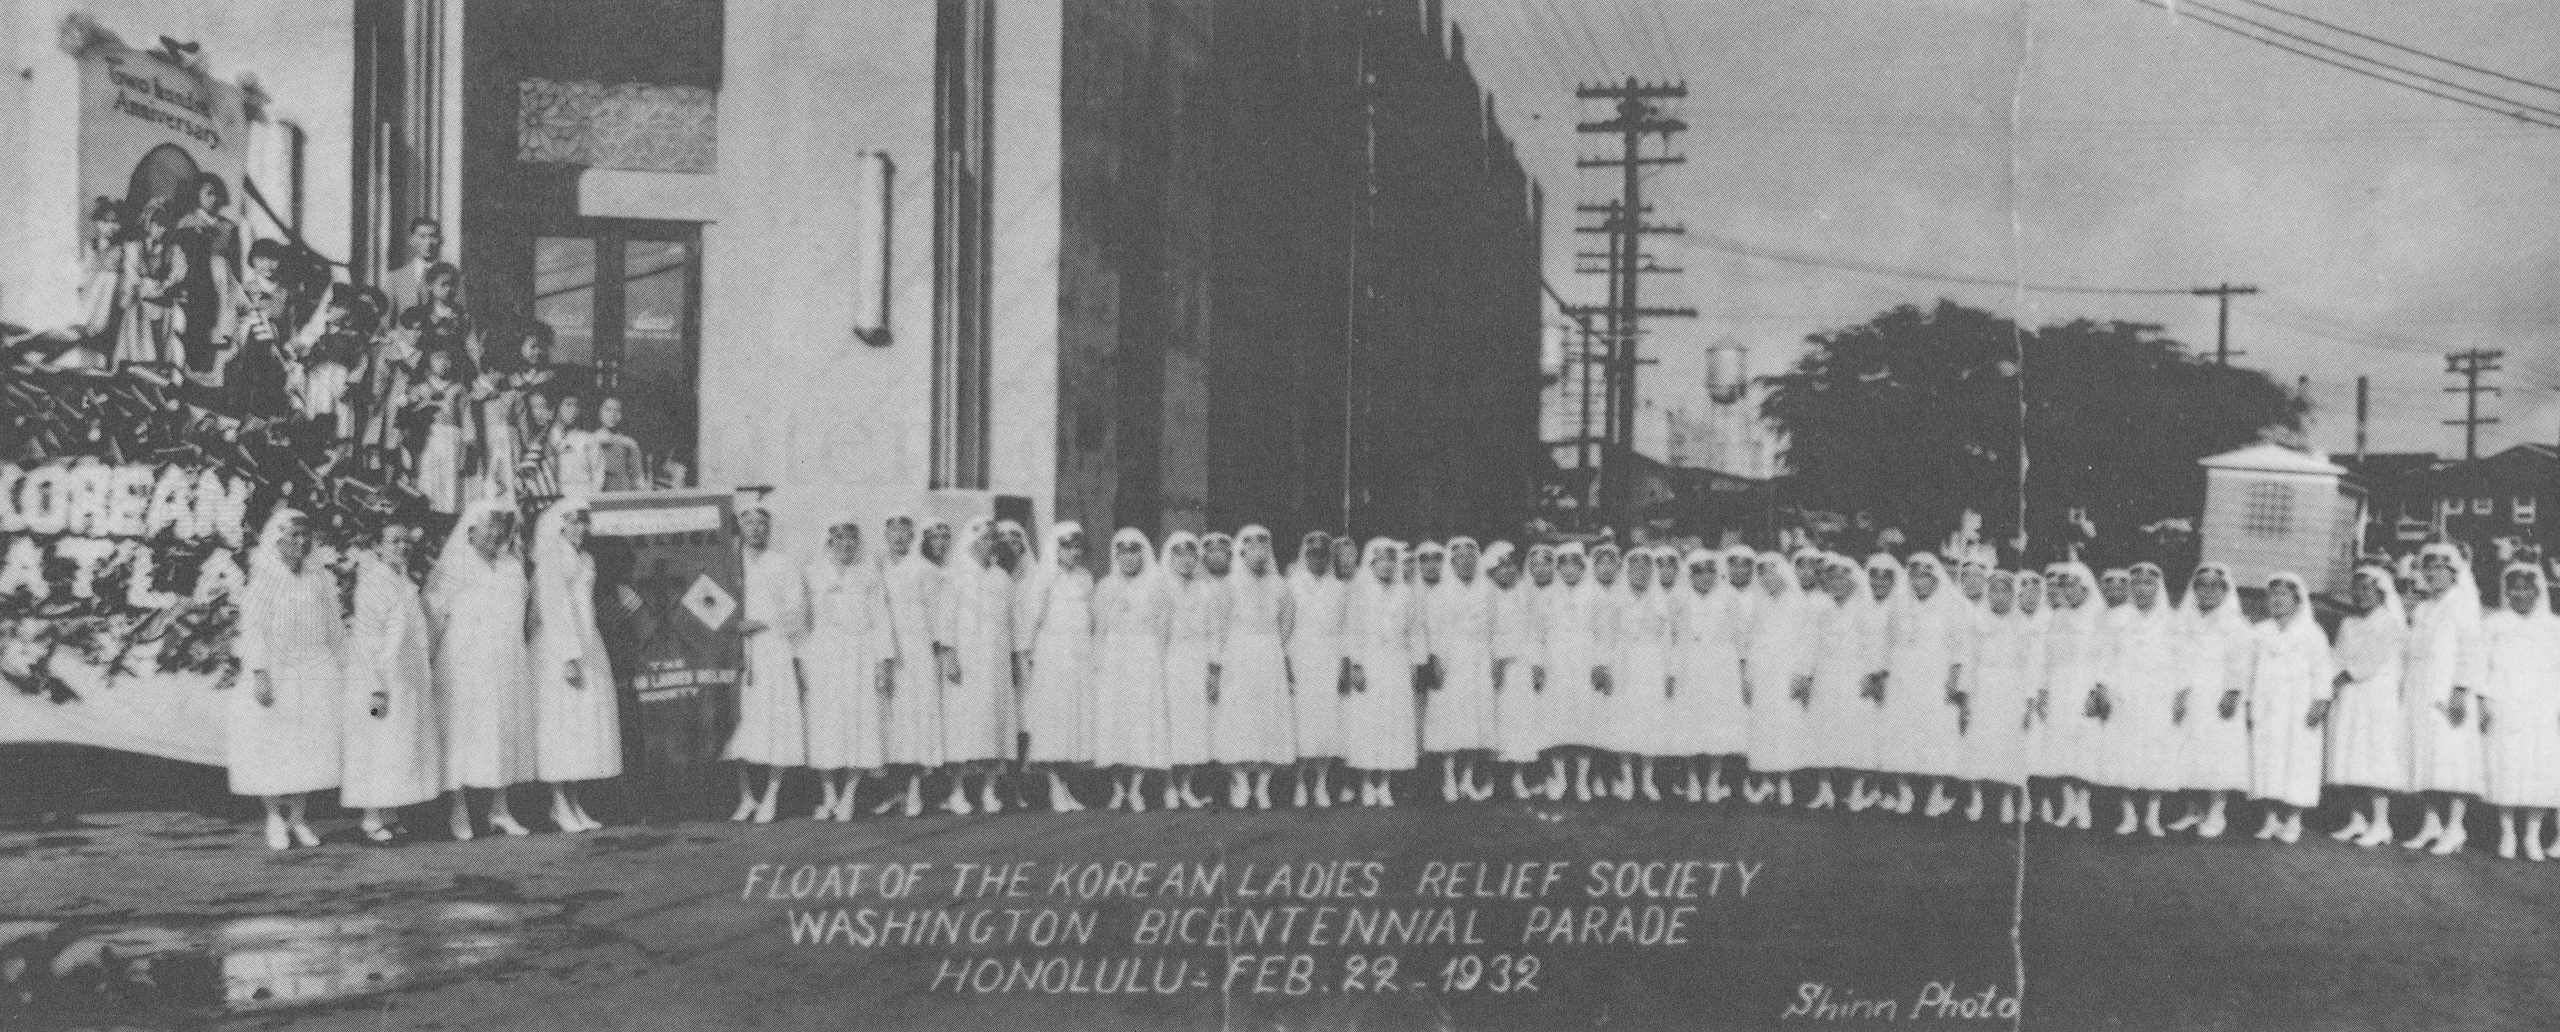 Float of the Korean Women’s(Ladies) Relief Society, Washington Bicentennial Parade, Honolulu, February 22, 1932